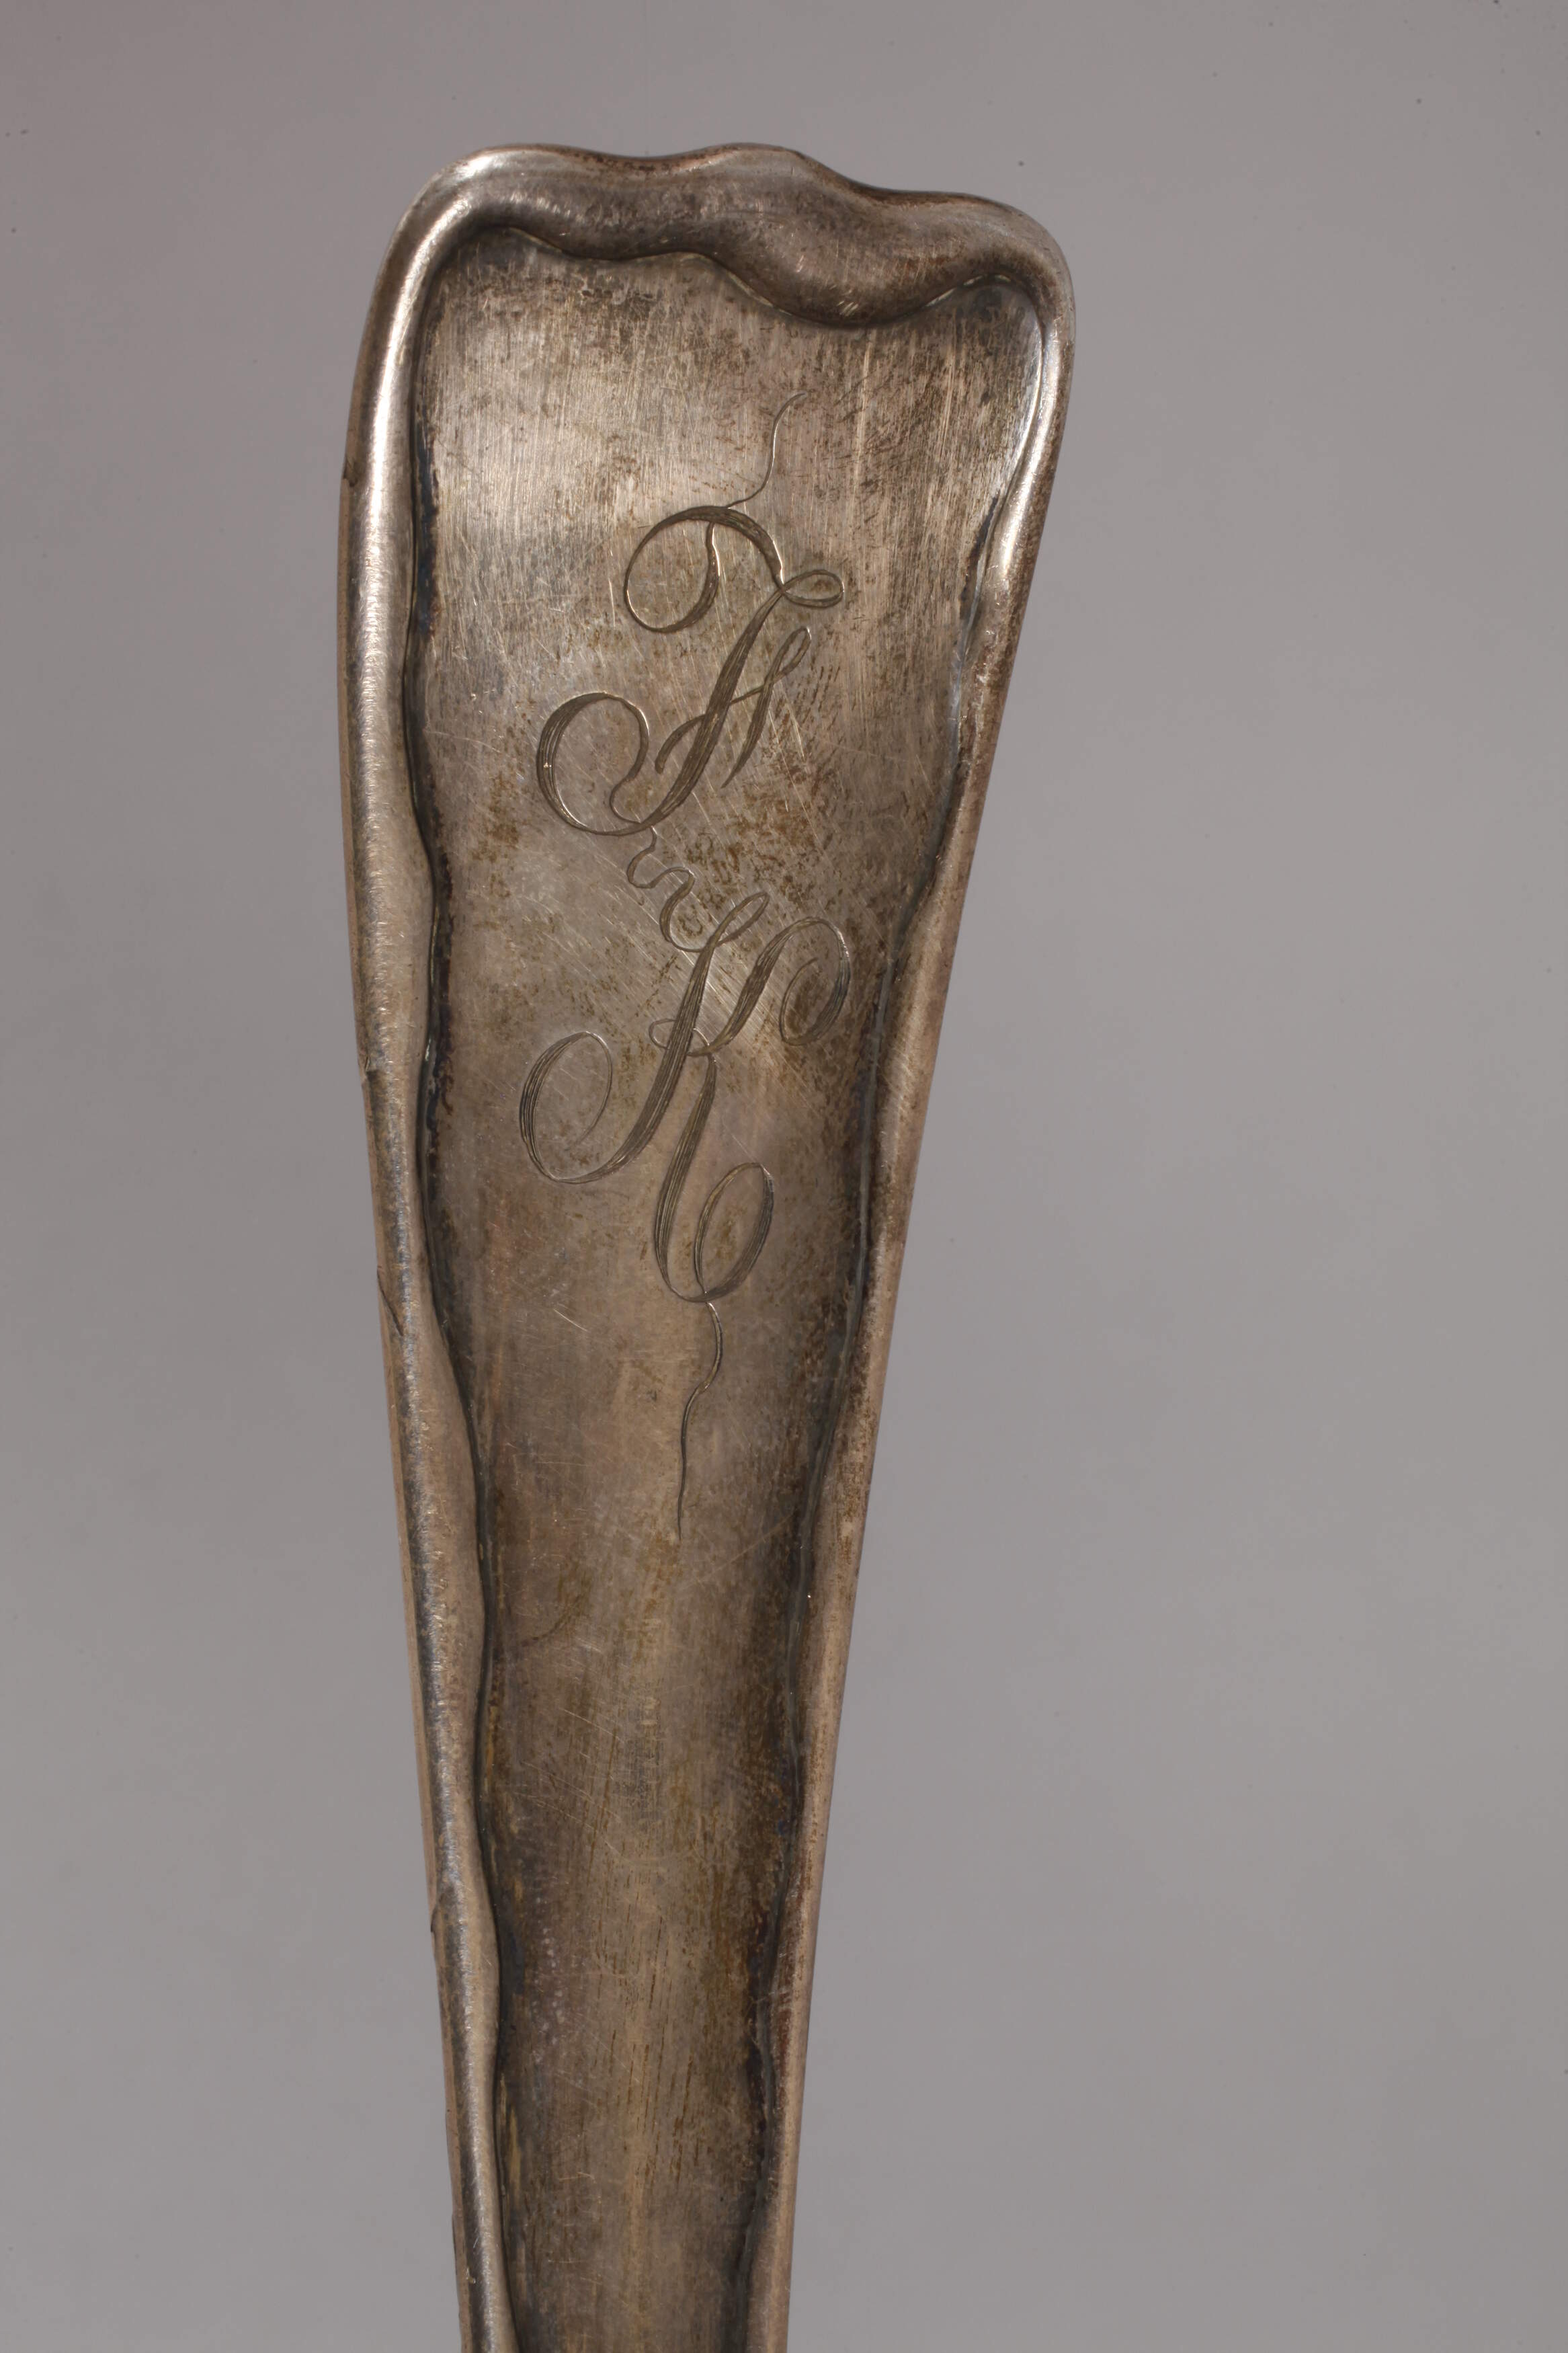 Silver ladle Tiffany - Image 2 of 3